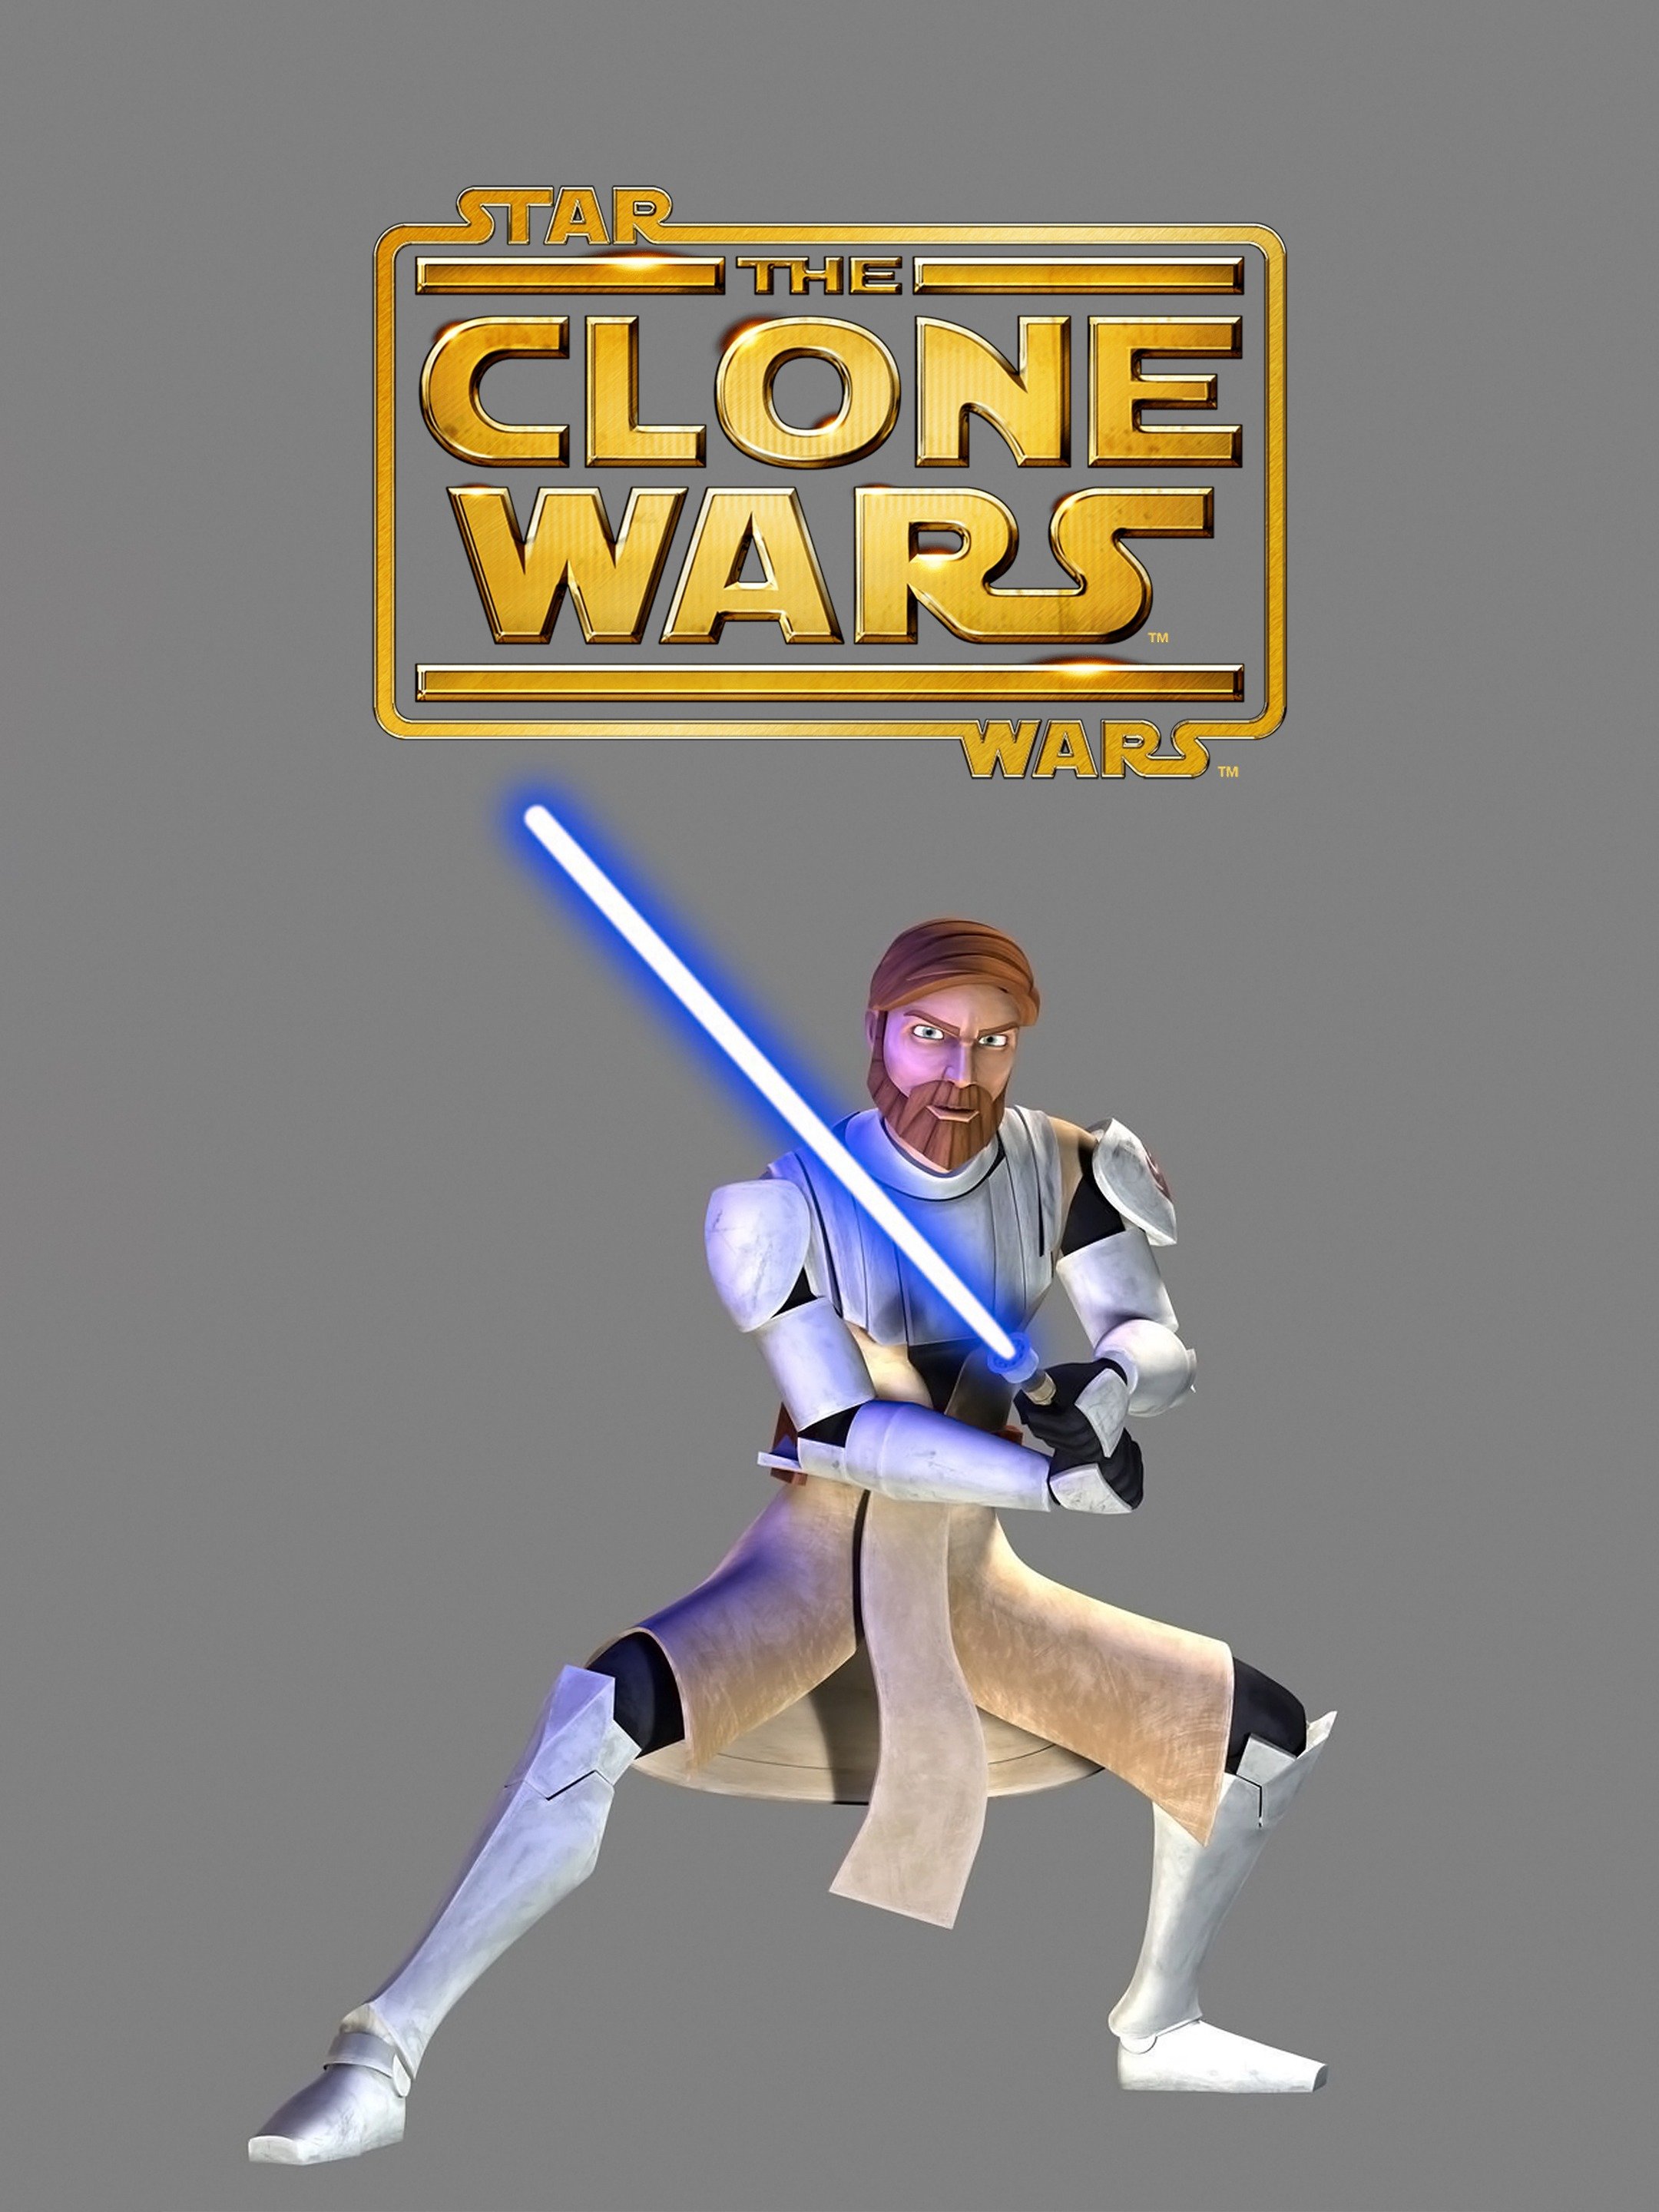 Star wars the clone wars season 2